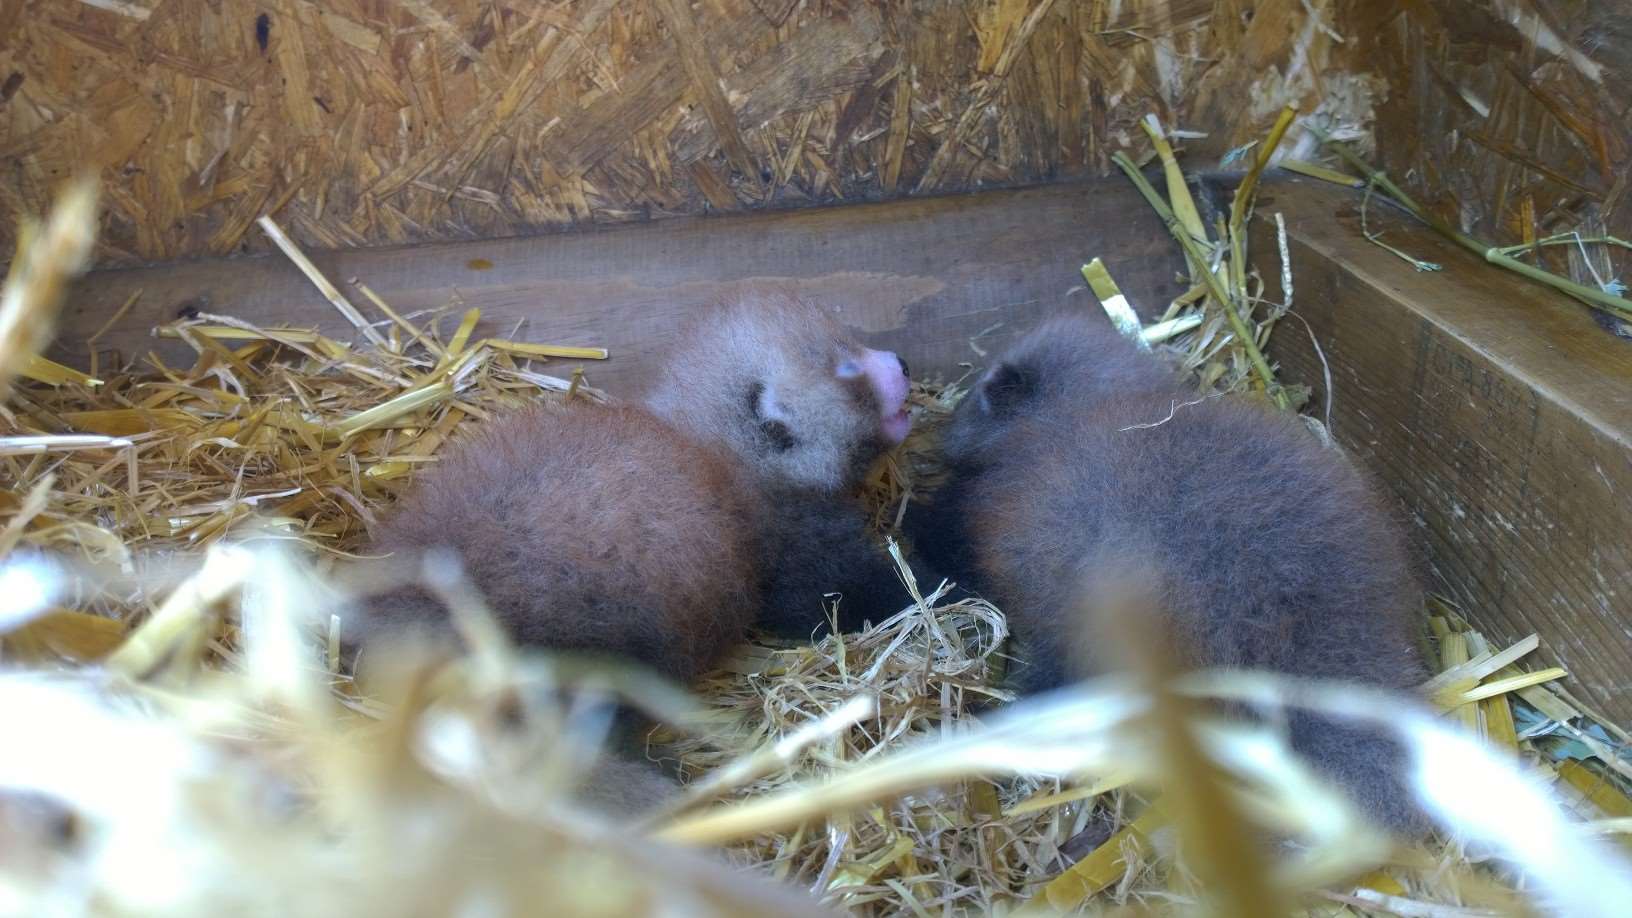 New born red panda babies